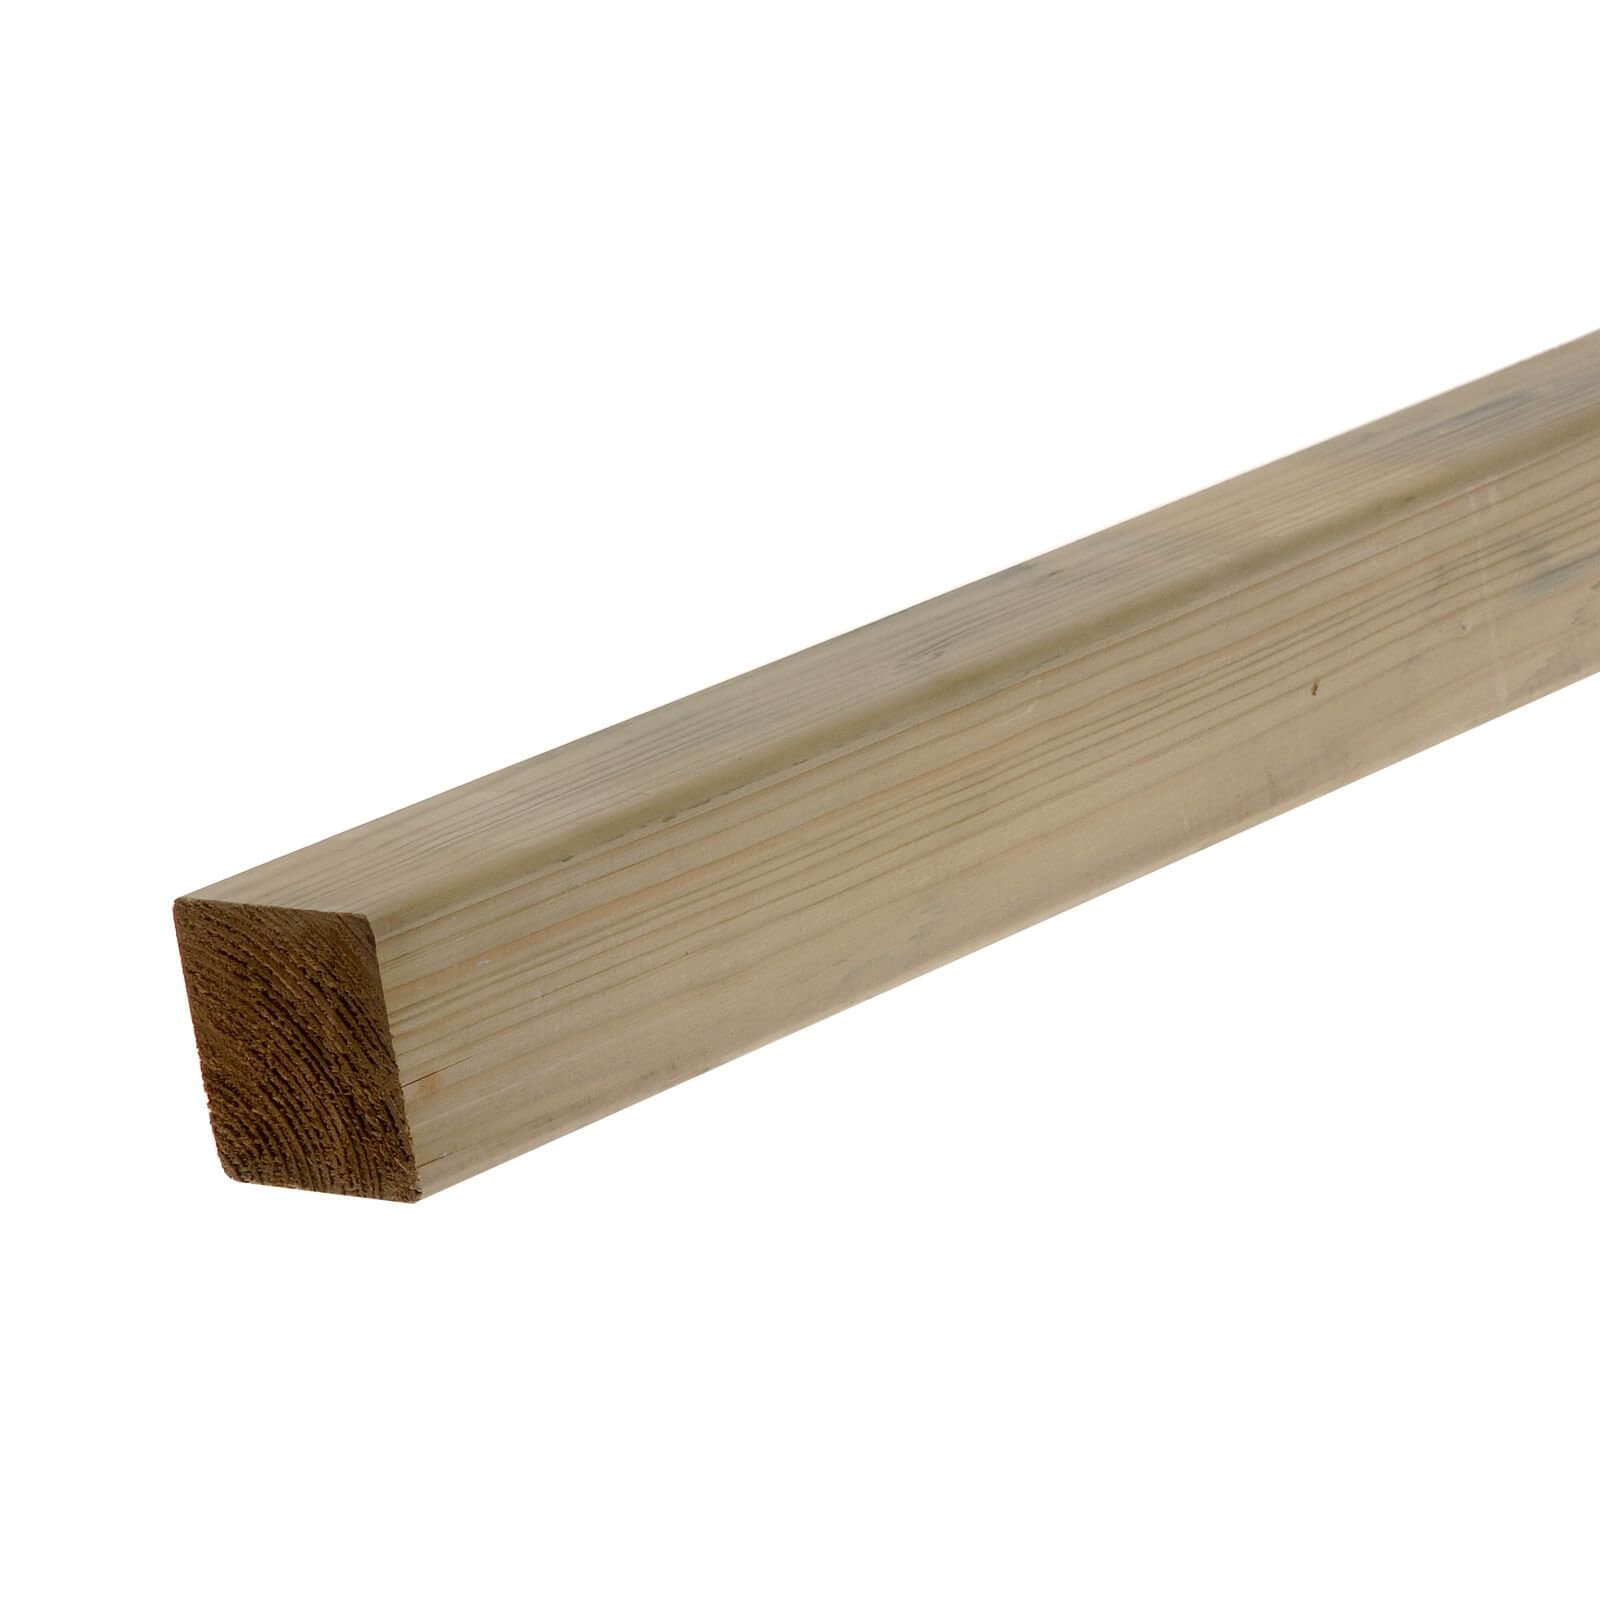 Photo of Metsa Sawn Planed Stick Softwood Timber R4c 2.4m -50mm X 50mm X 2400mm-